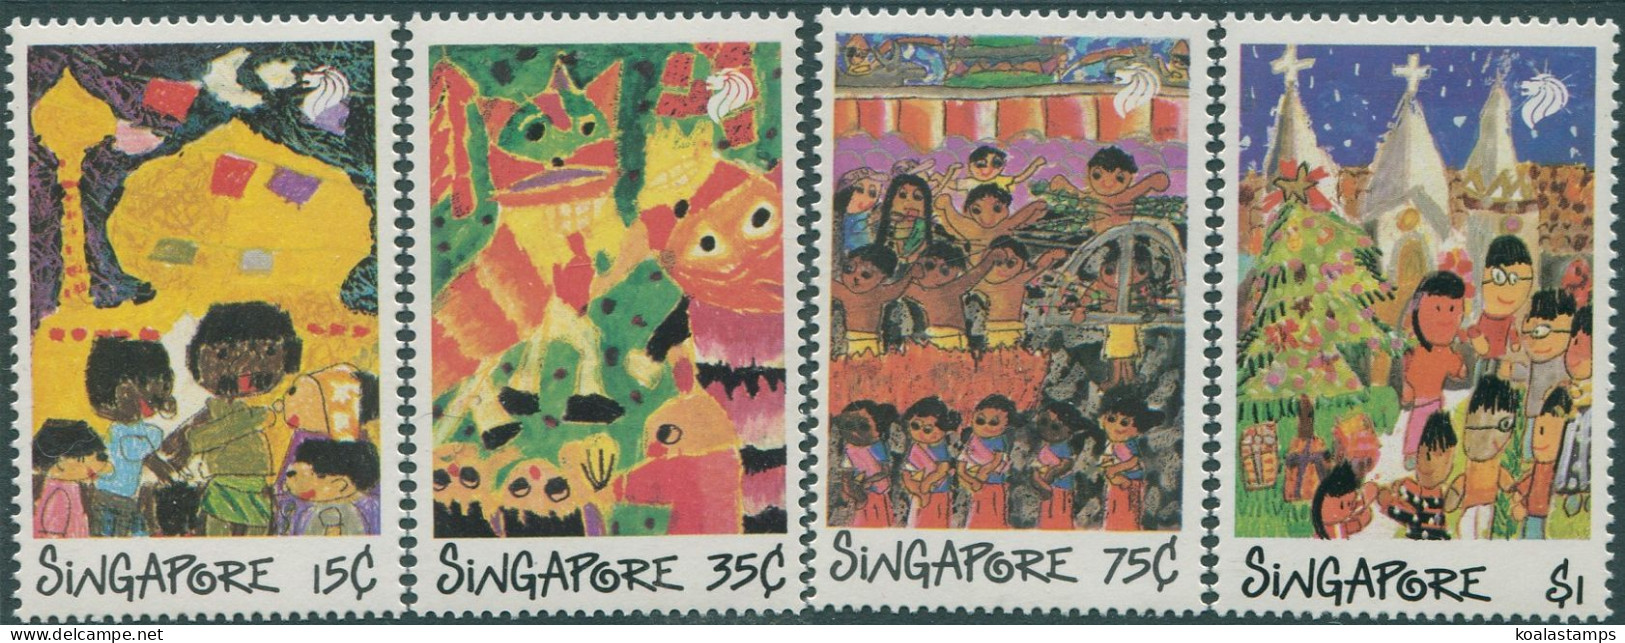 Singapore 1989 SG606-609 Children's Drawings Set MNH - Singapore (1959-...)